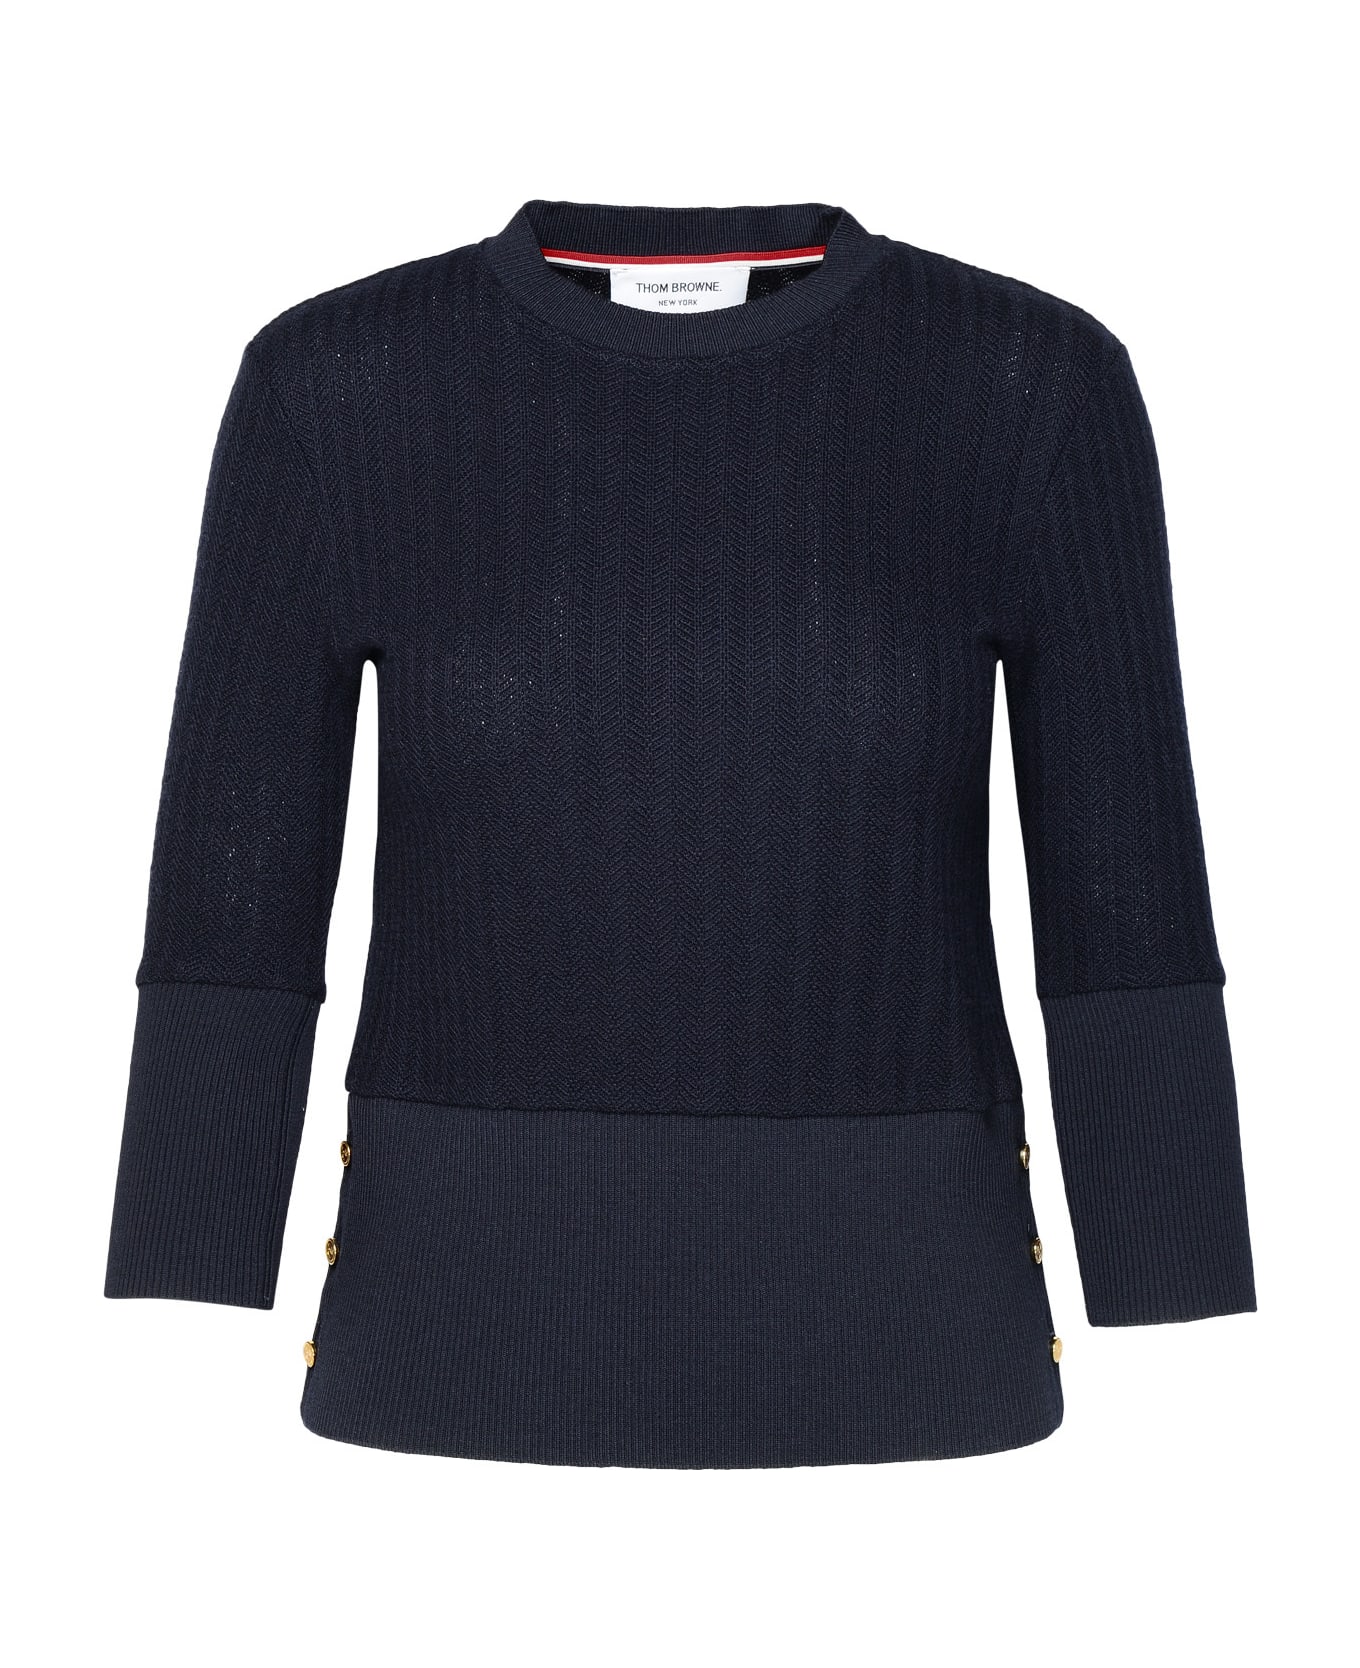 Thom Browne Navy Virgin Wool Sweater - Navy ニットウェア